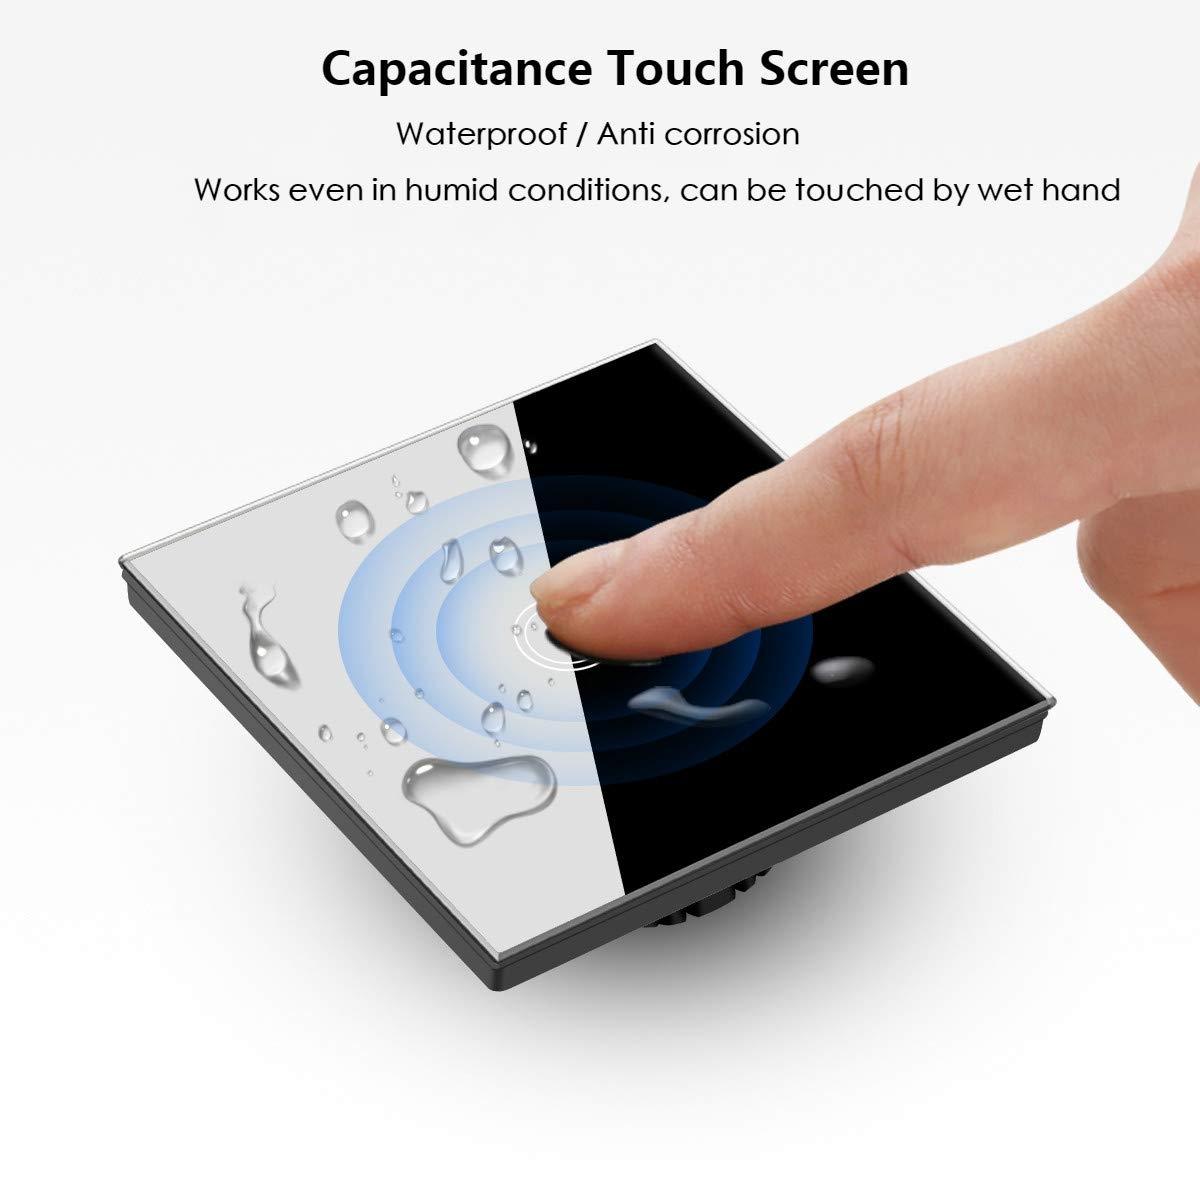 Interruttore touch screen Amazon